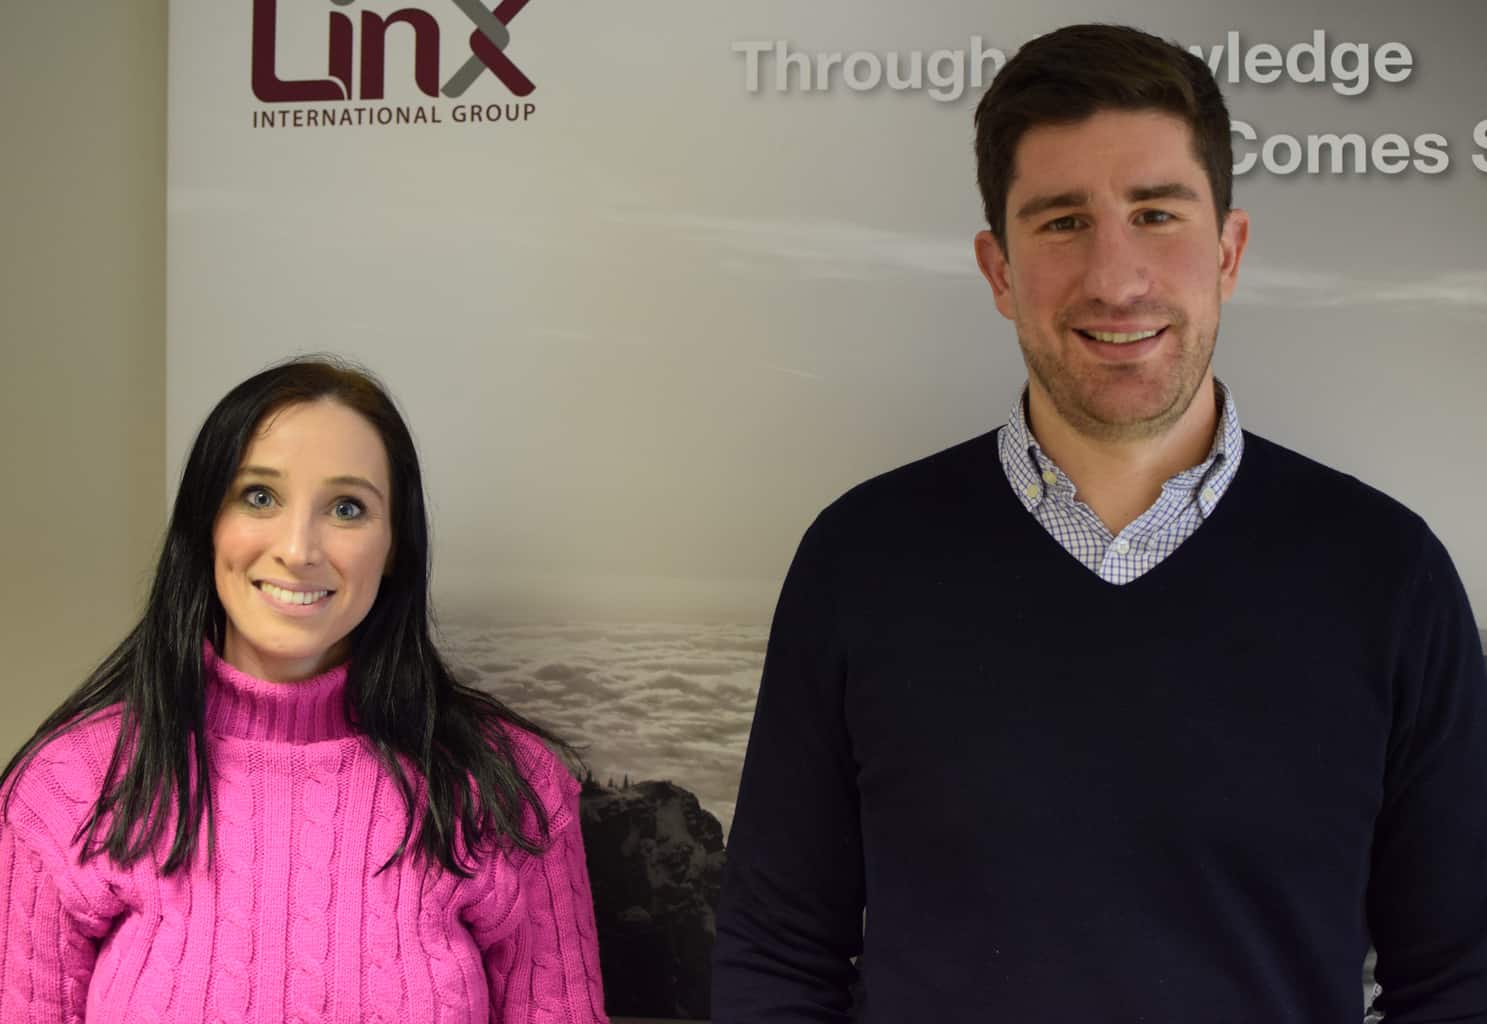 Linx International Group